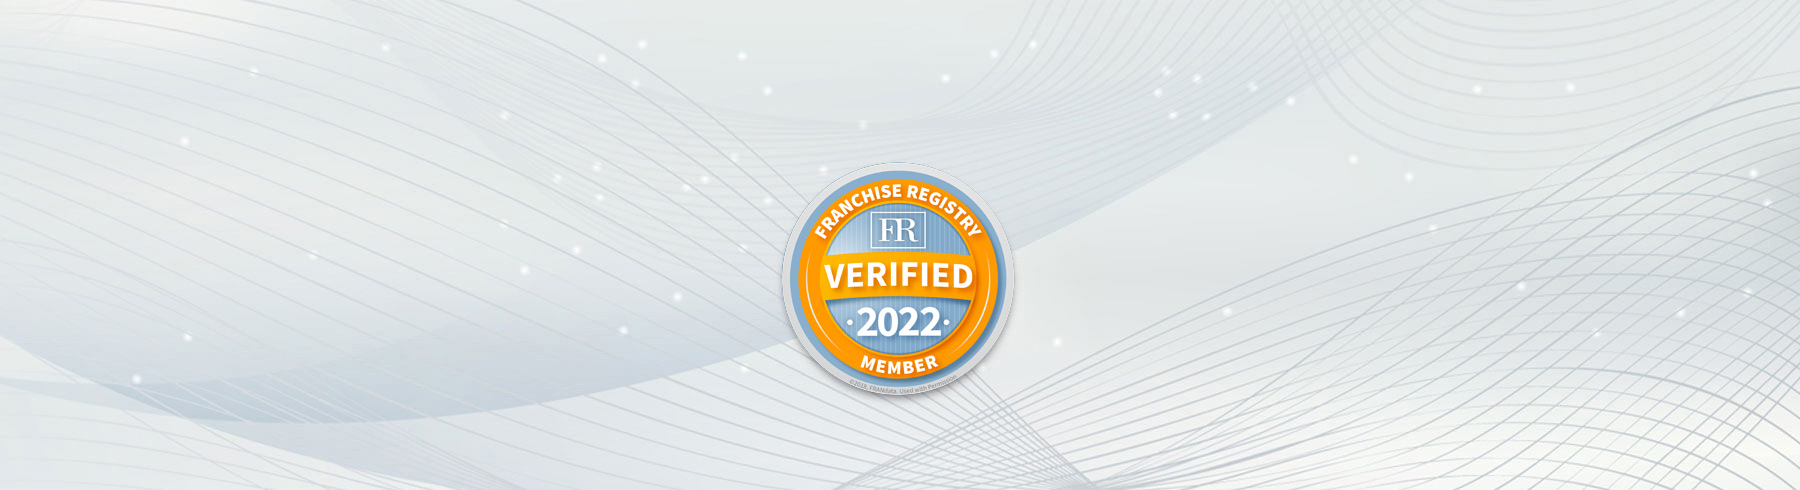 Franchise Registry Verified 2022 logo